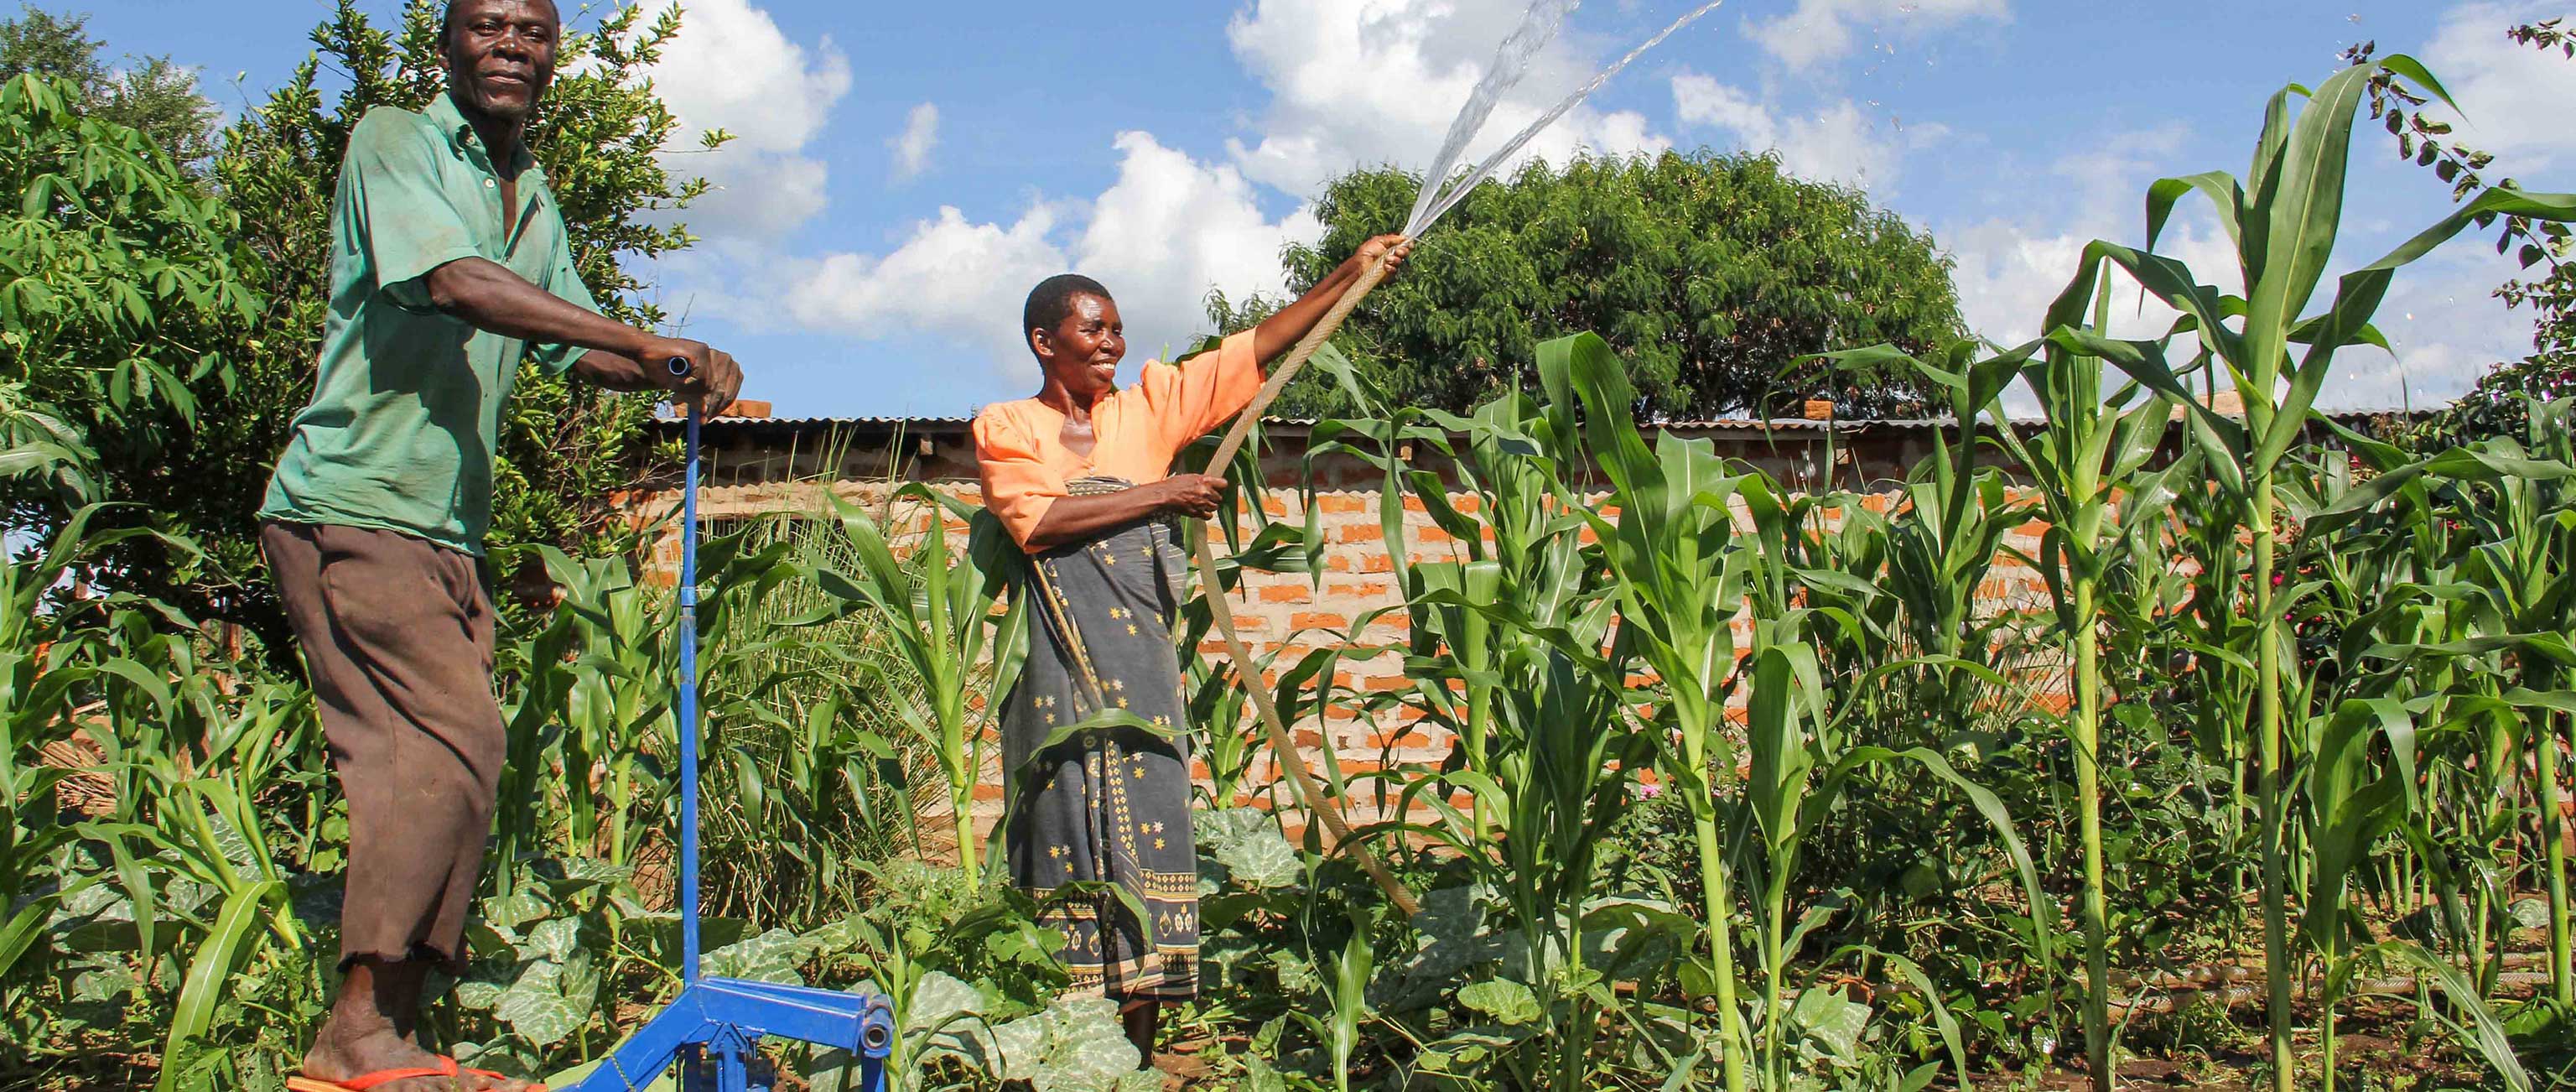 How Kickstart is Mobilizing an Irrigation Movement in Sub-Saharan Africa